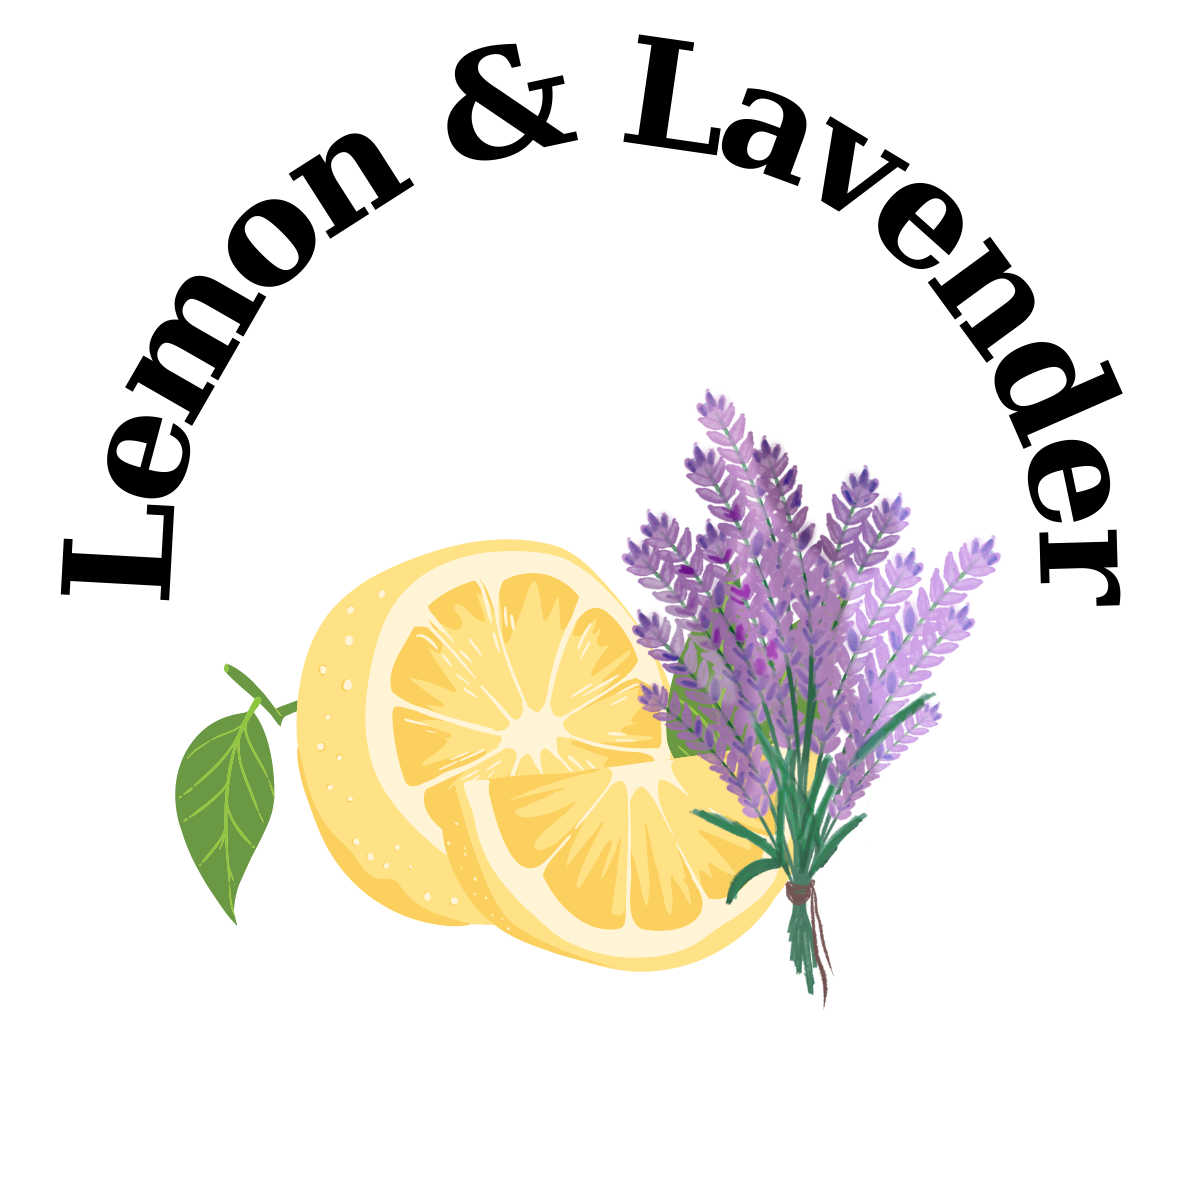 Lemon & Lavender Room Diffuser